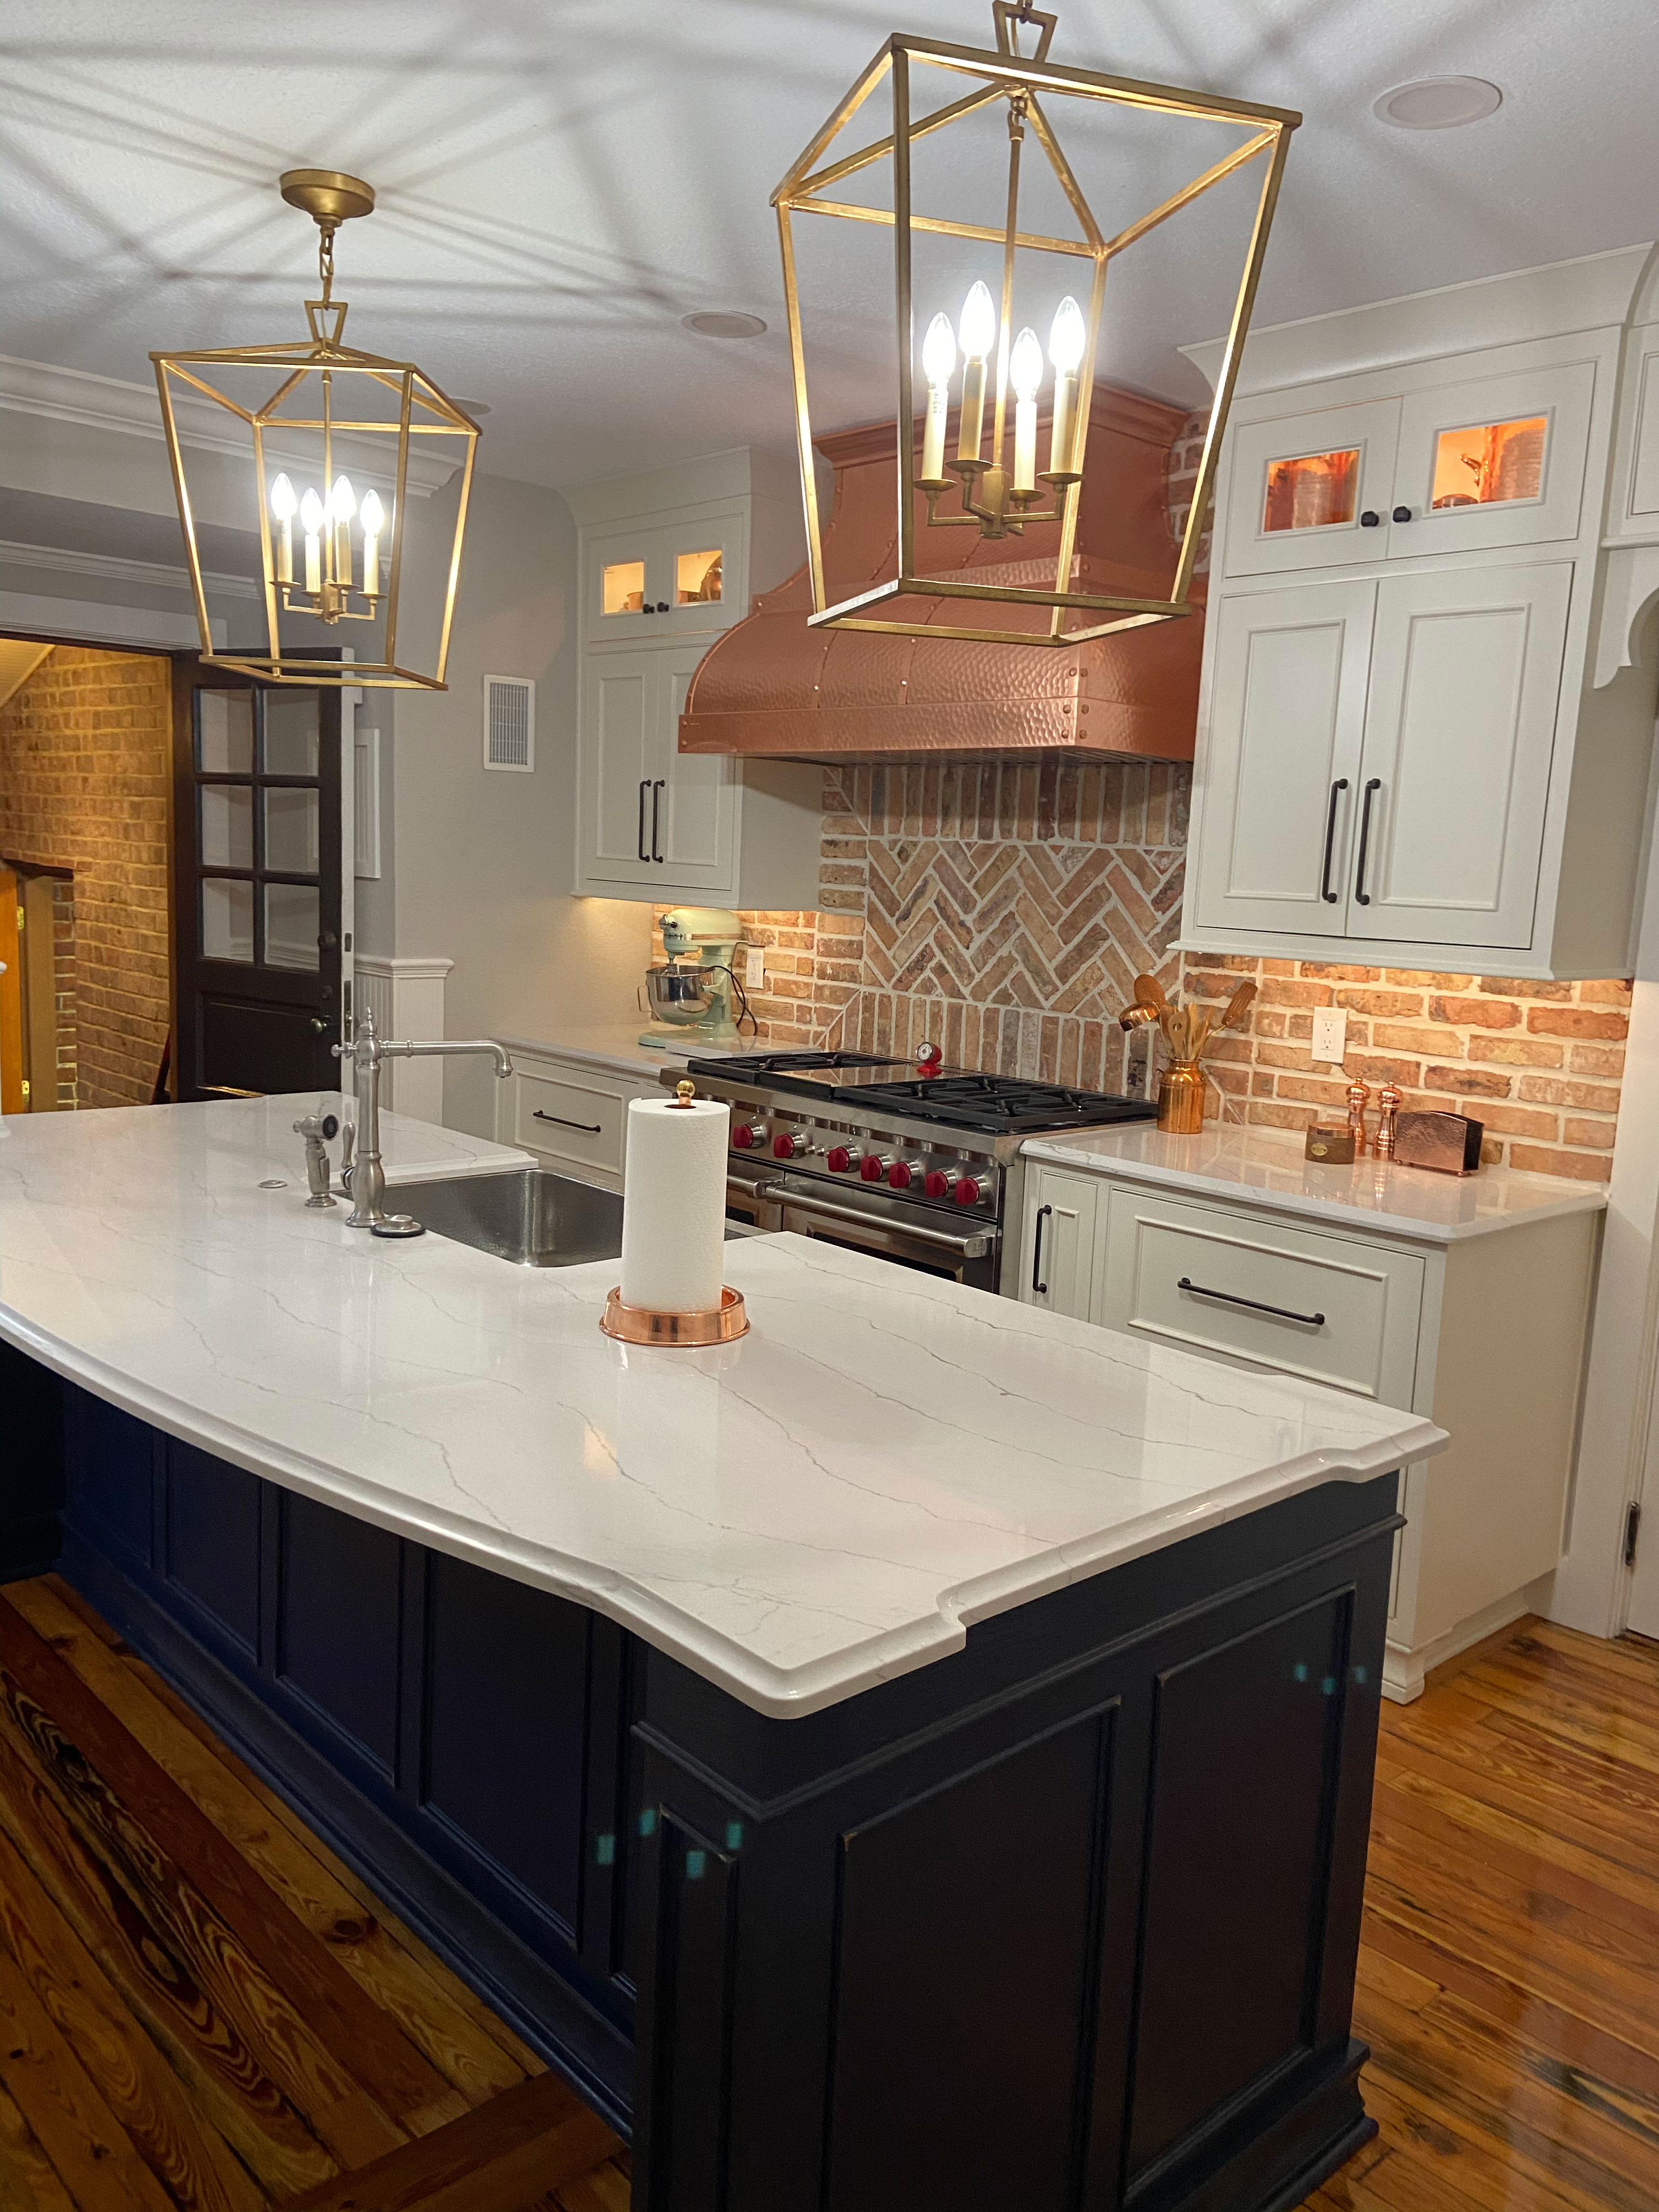 Stylish copper range hood stunning contemporary kitchen remodeling,incorporating white kitchen cabinets, marble kitchen countertops and brick backsplash